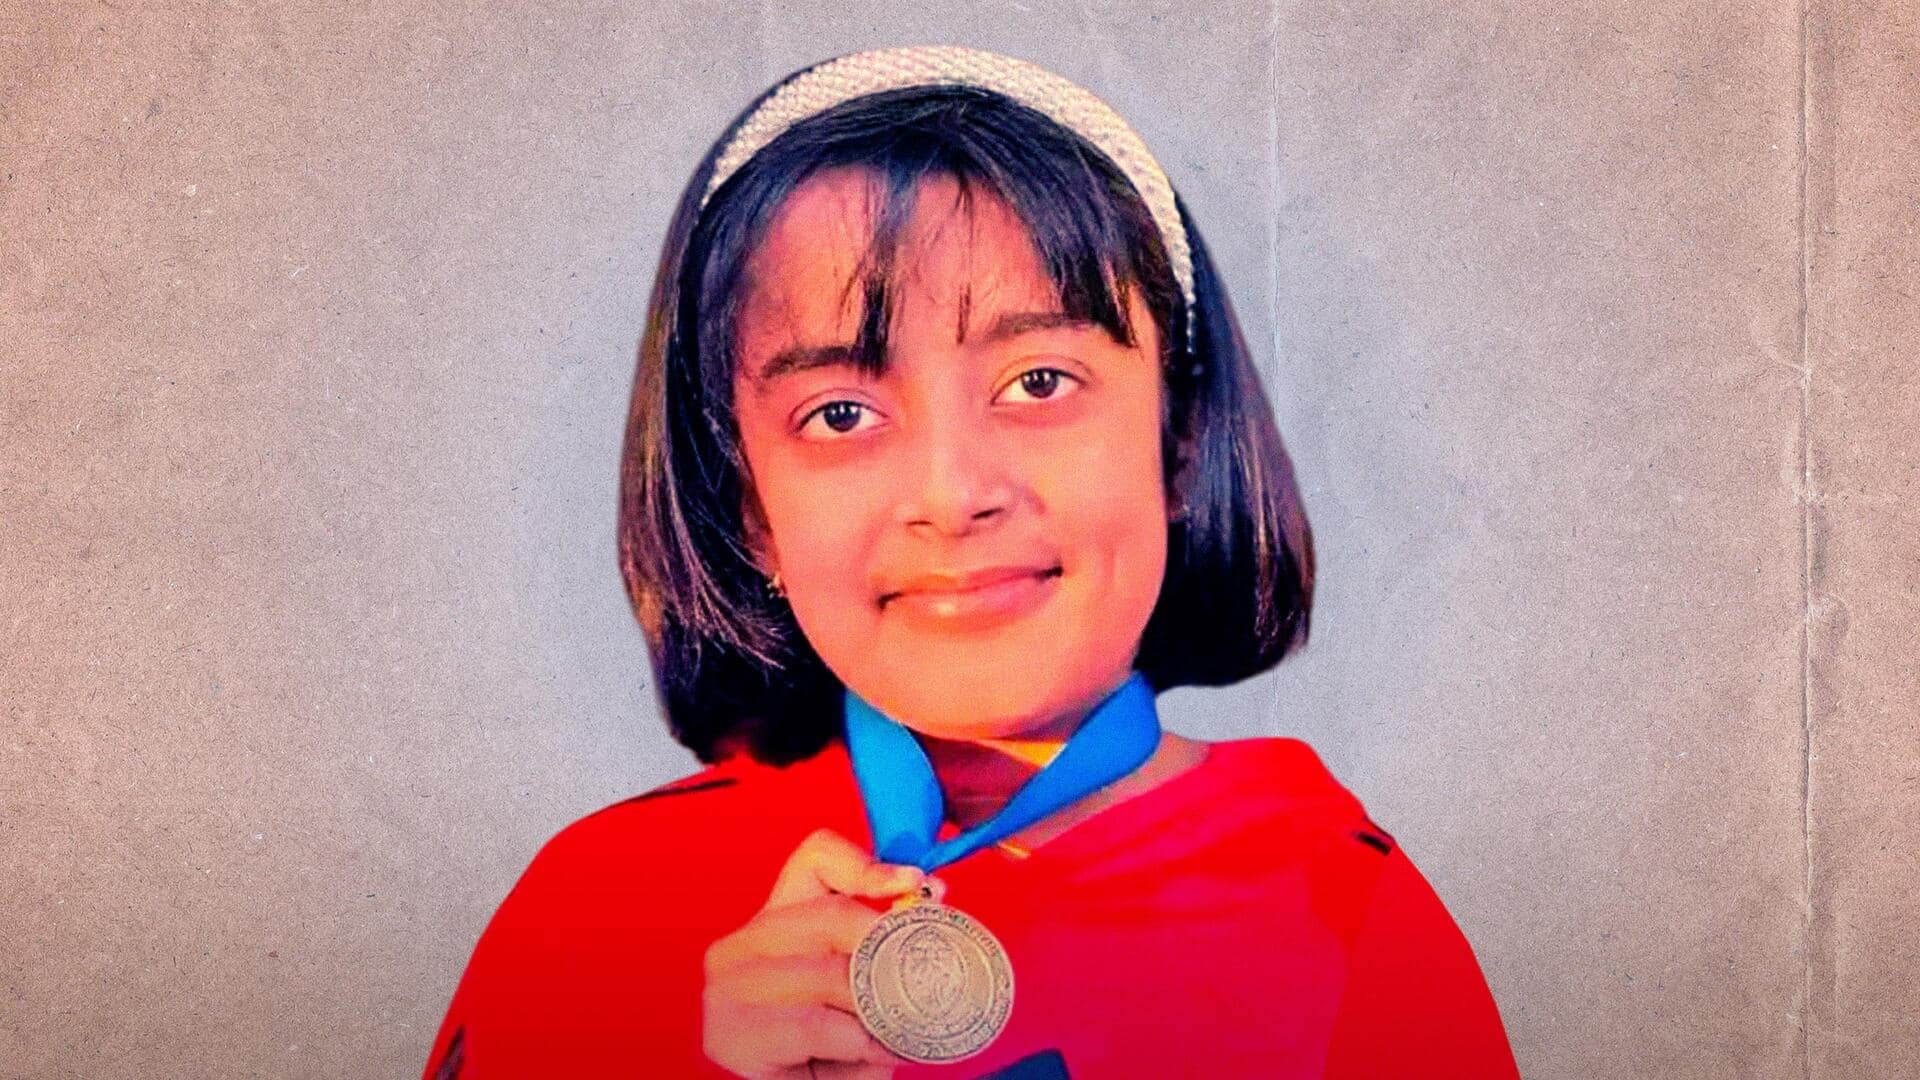 9-year-old Preesha Chakraborty named among the world's brightest students